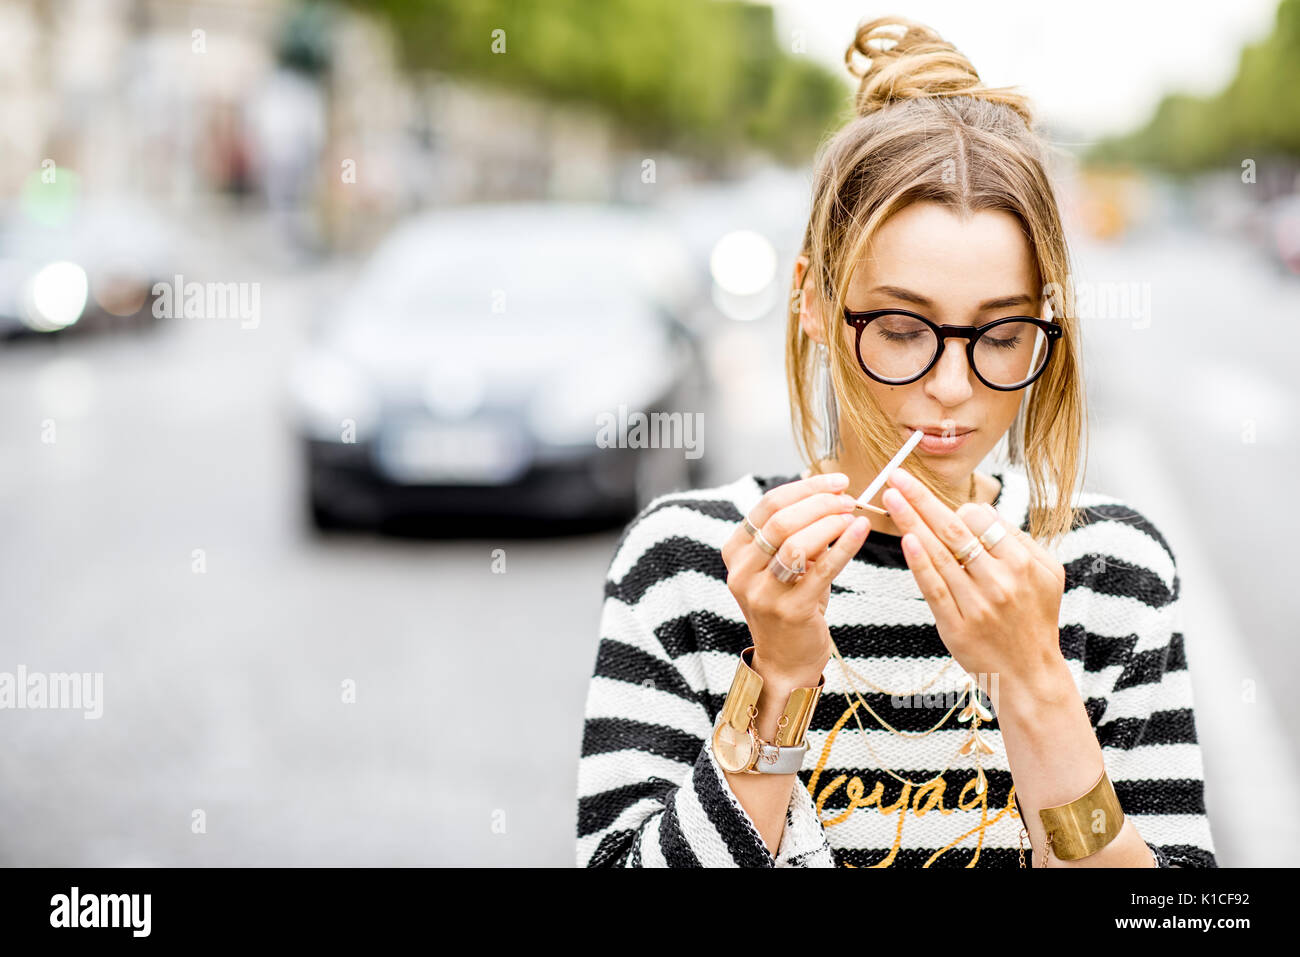 Woman smoking on the street Stock Photo